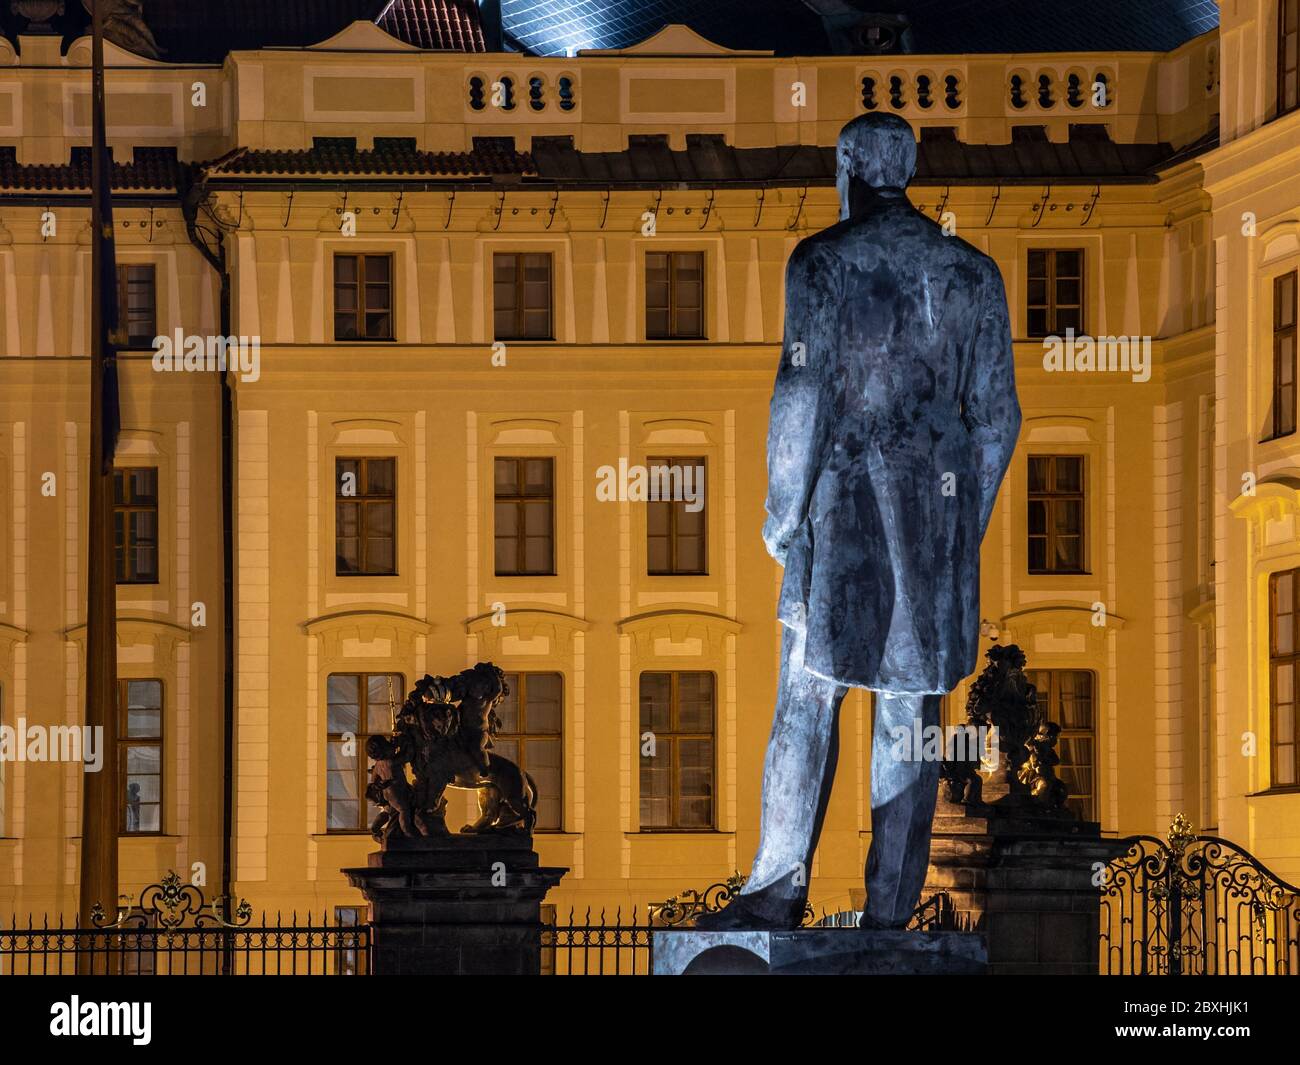 PRAGUE, CZECH REPUBLIC - OCTOBER 11, 2018: The first president of Czechoslovakia - Tomas Garrigue Masayk, alias TGM, statue at Hradcanske square near Prague Castle, Prague, Czech Republic. View from back side by night. Stock Photo